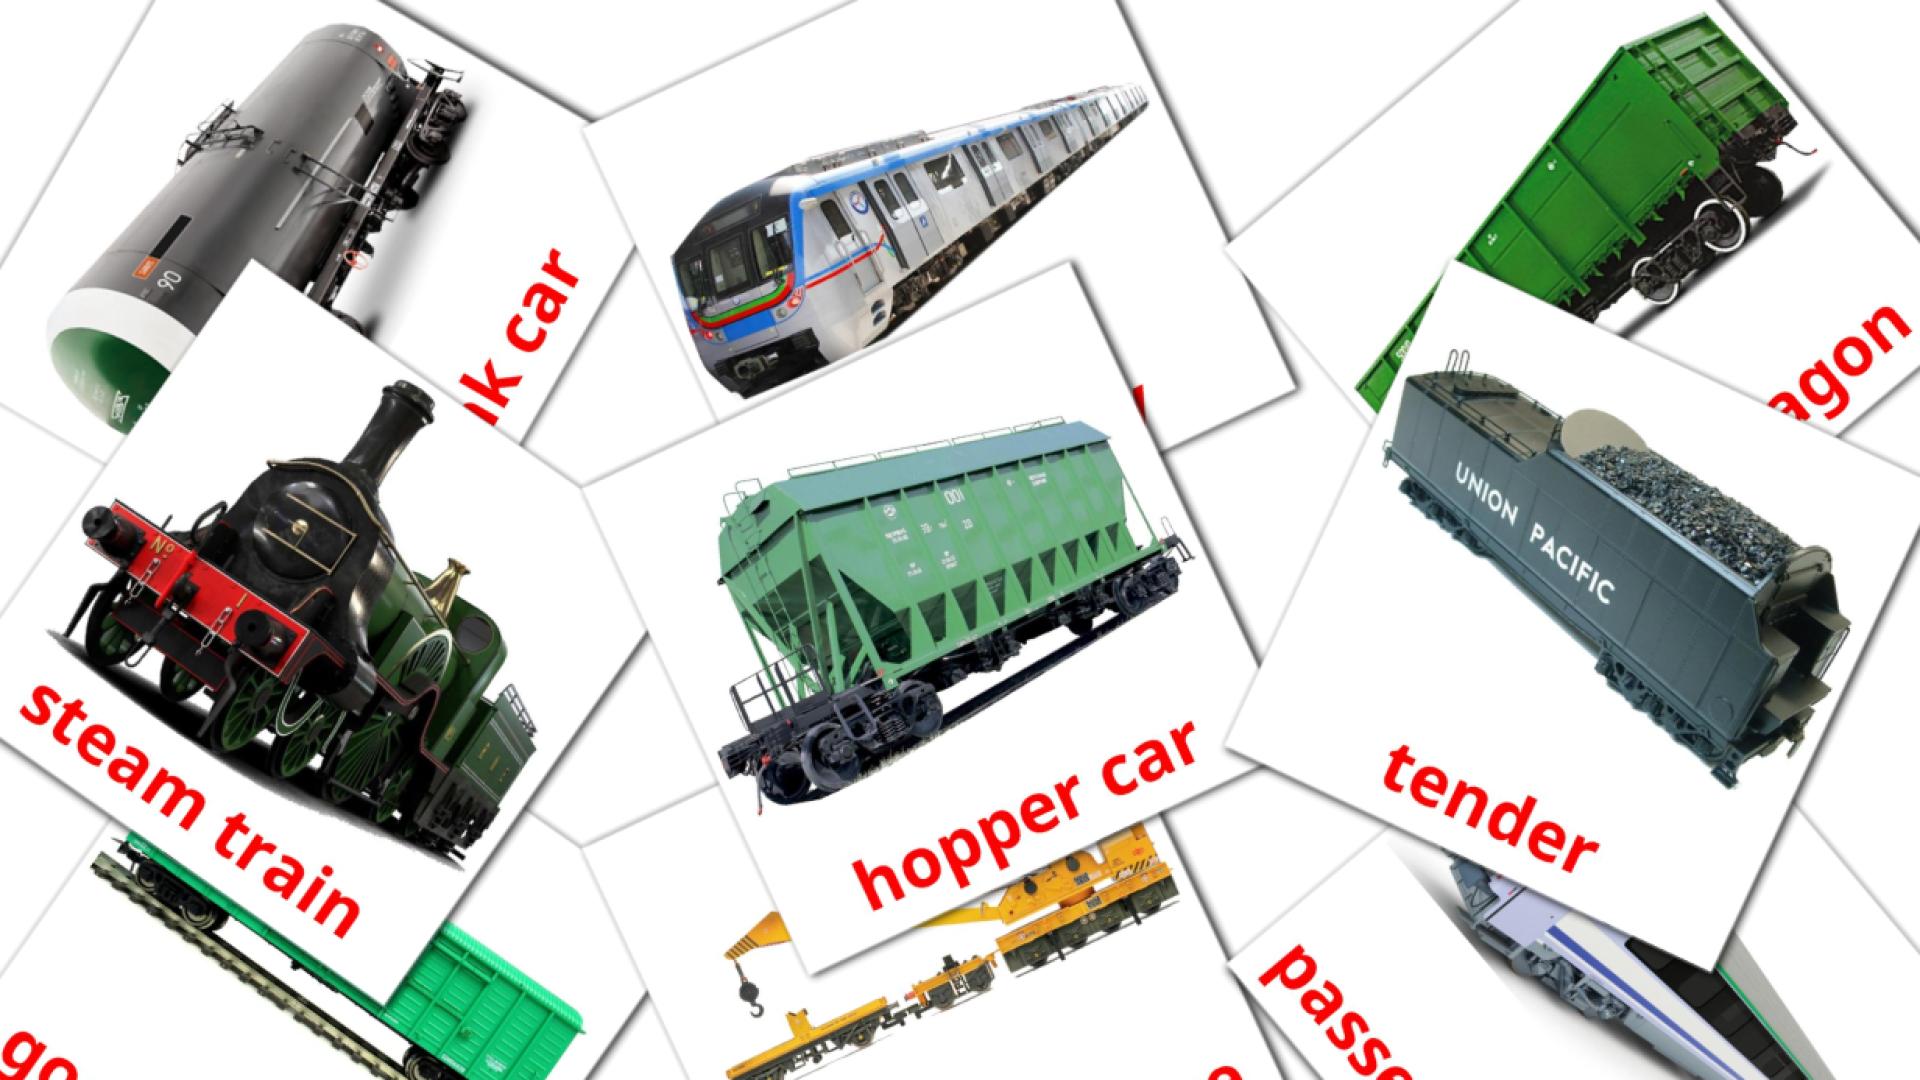 Imagiers Rail transport